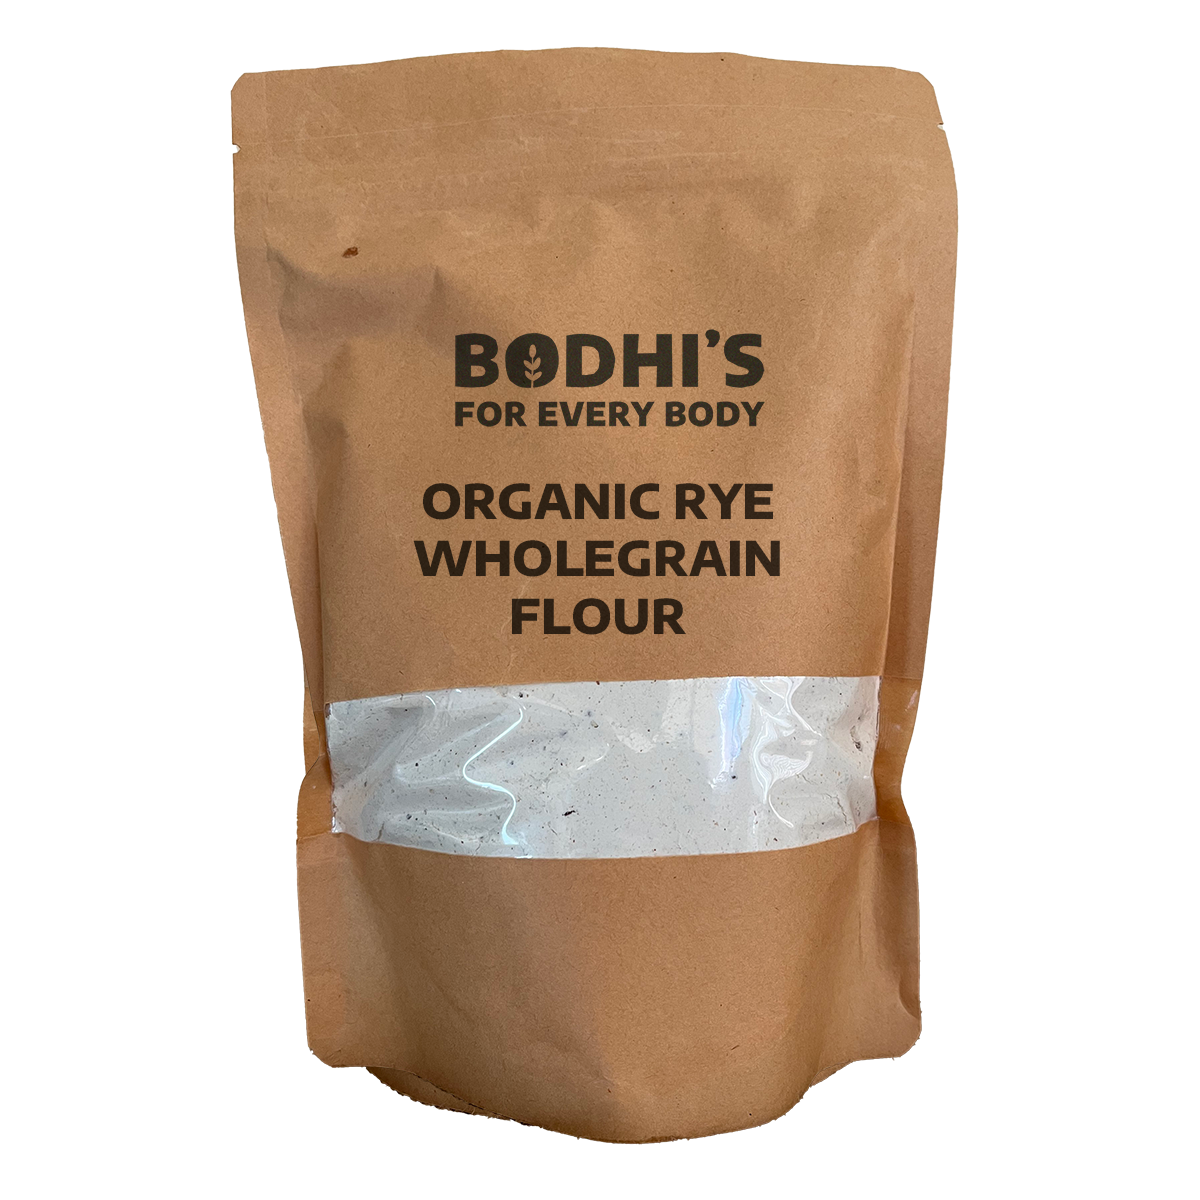 A photo of Bodhi's Organic Rye Wholegrain flour